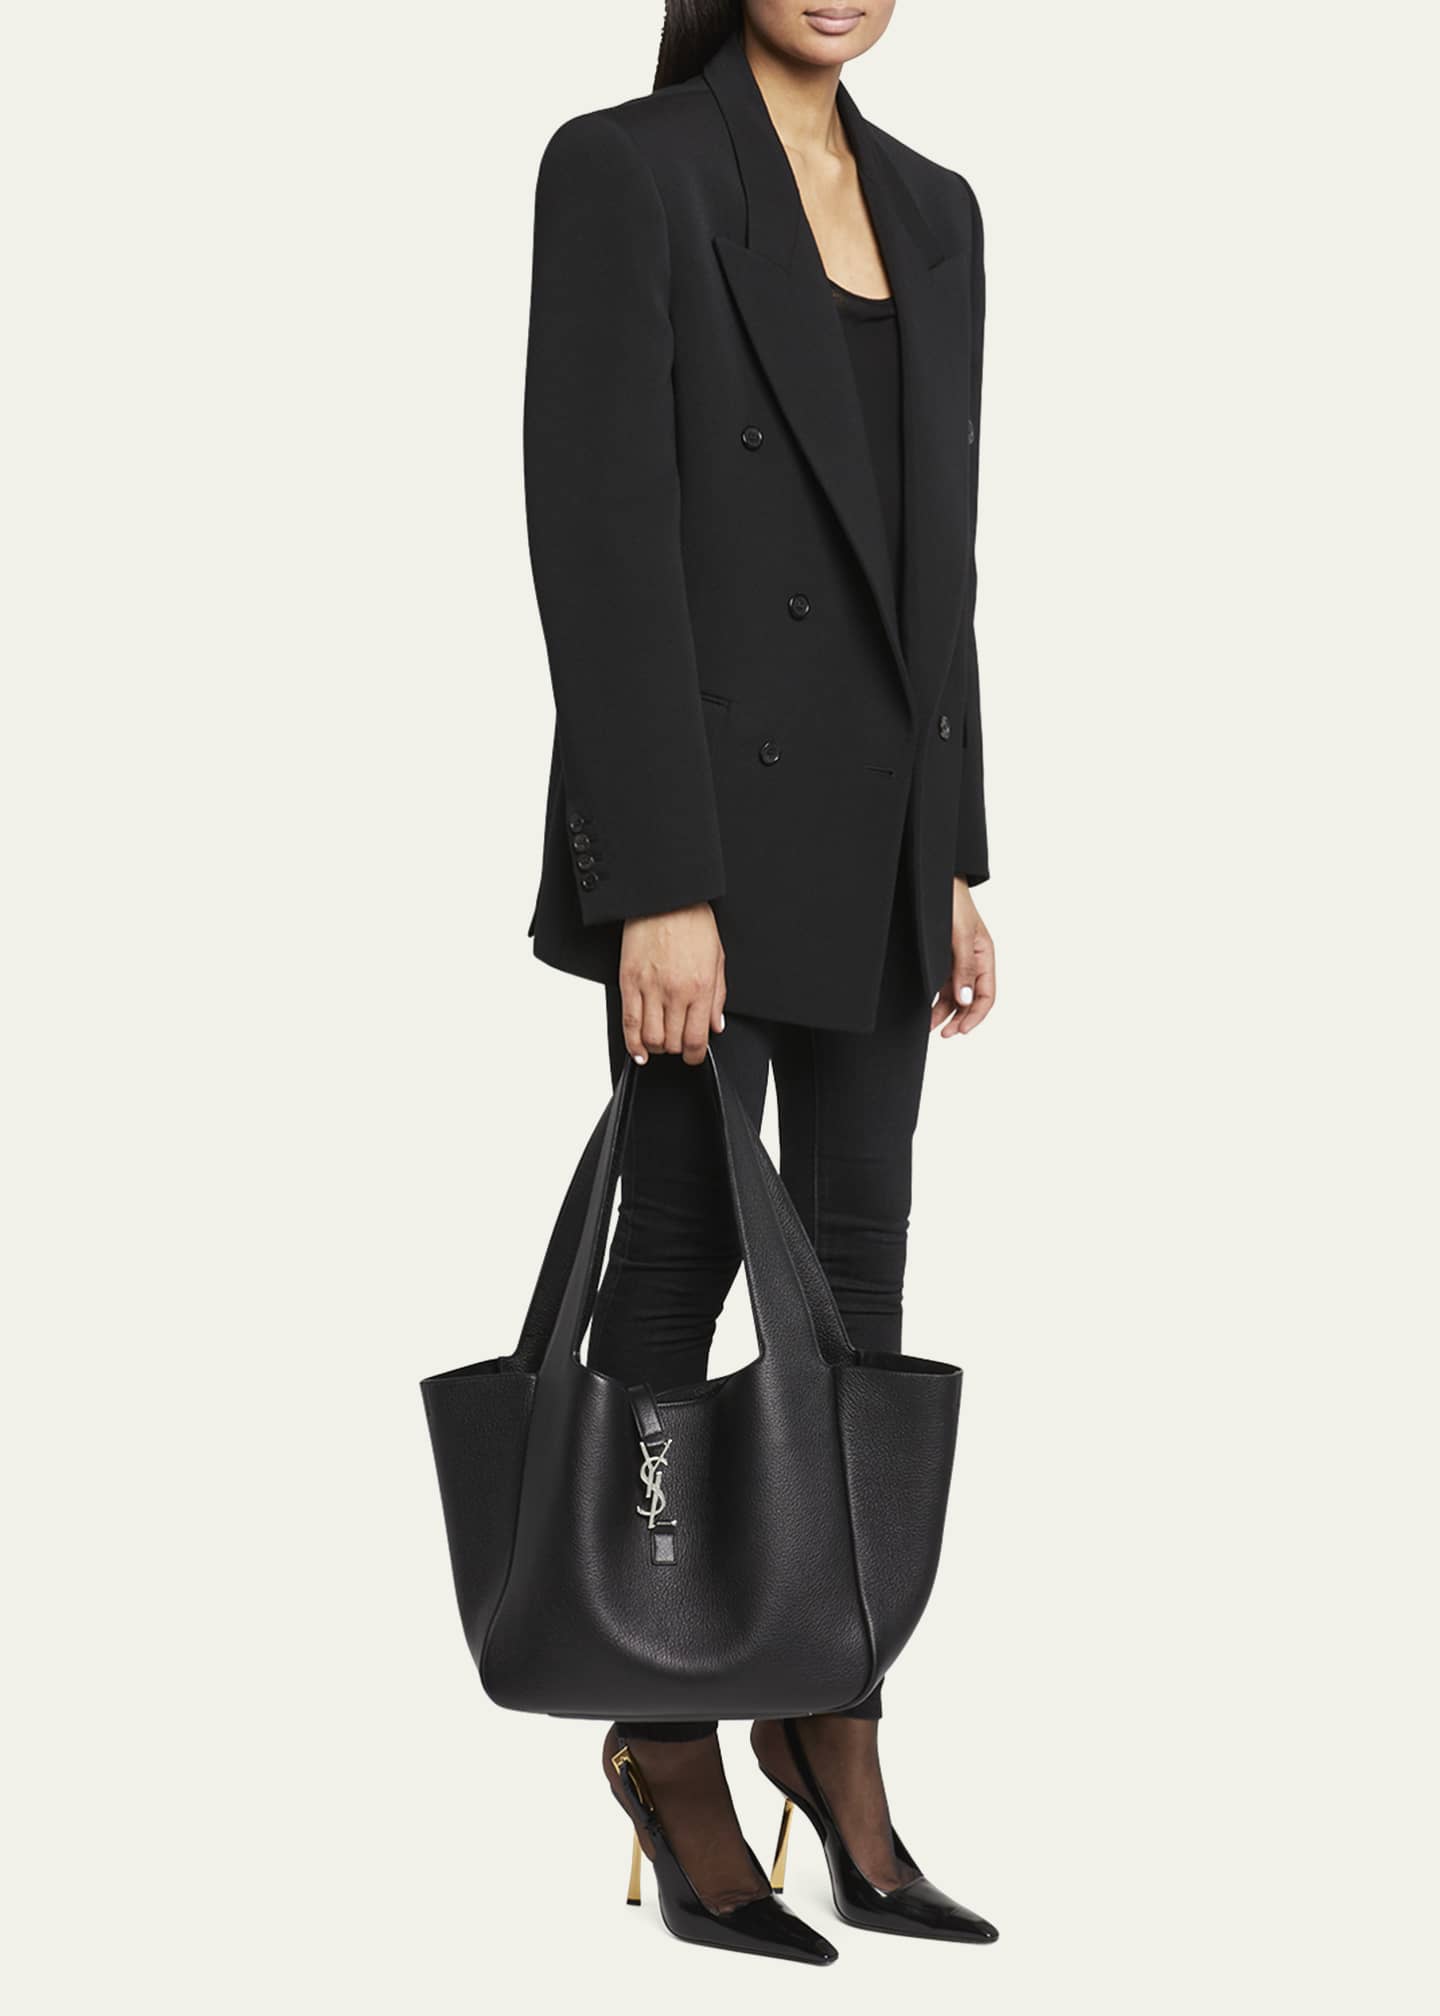 Saint Laurent Bea Cabas YSL Tote Bag in Supple Leather - Bergdorf Goodman